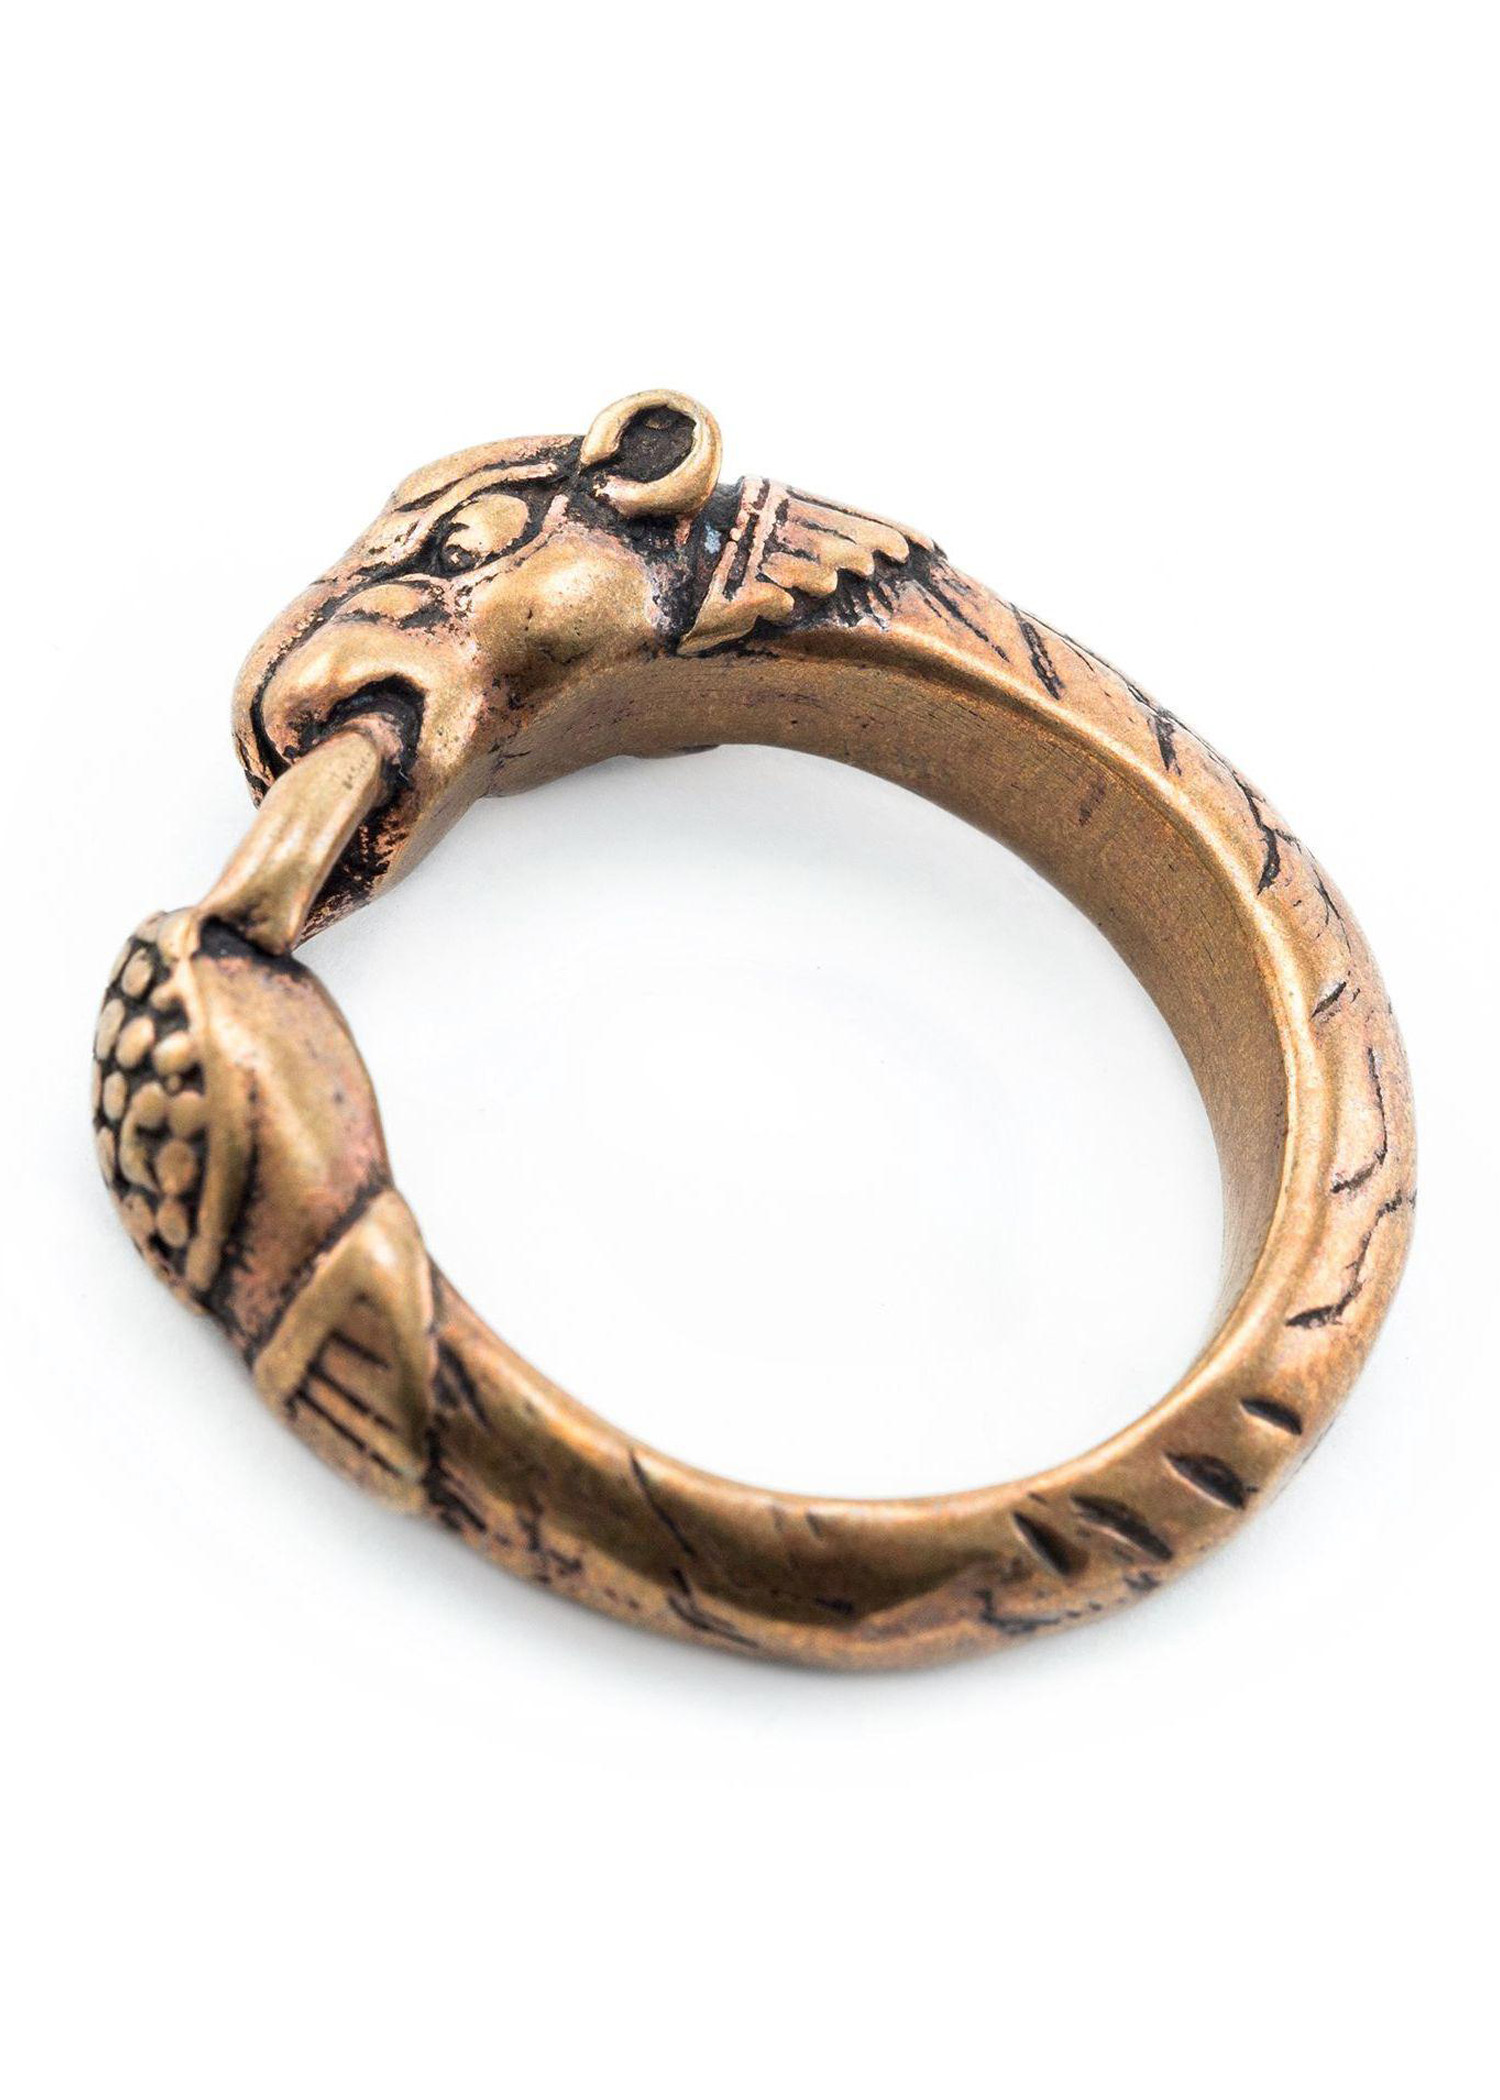 Wikinger Ring mit Hundekopf, Bronze, Ringgröße 16/50